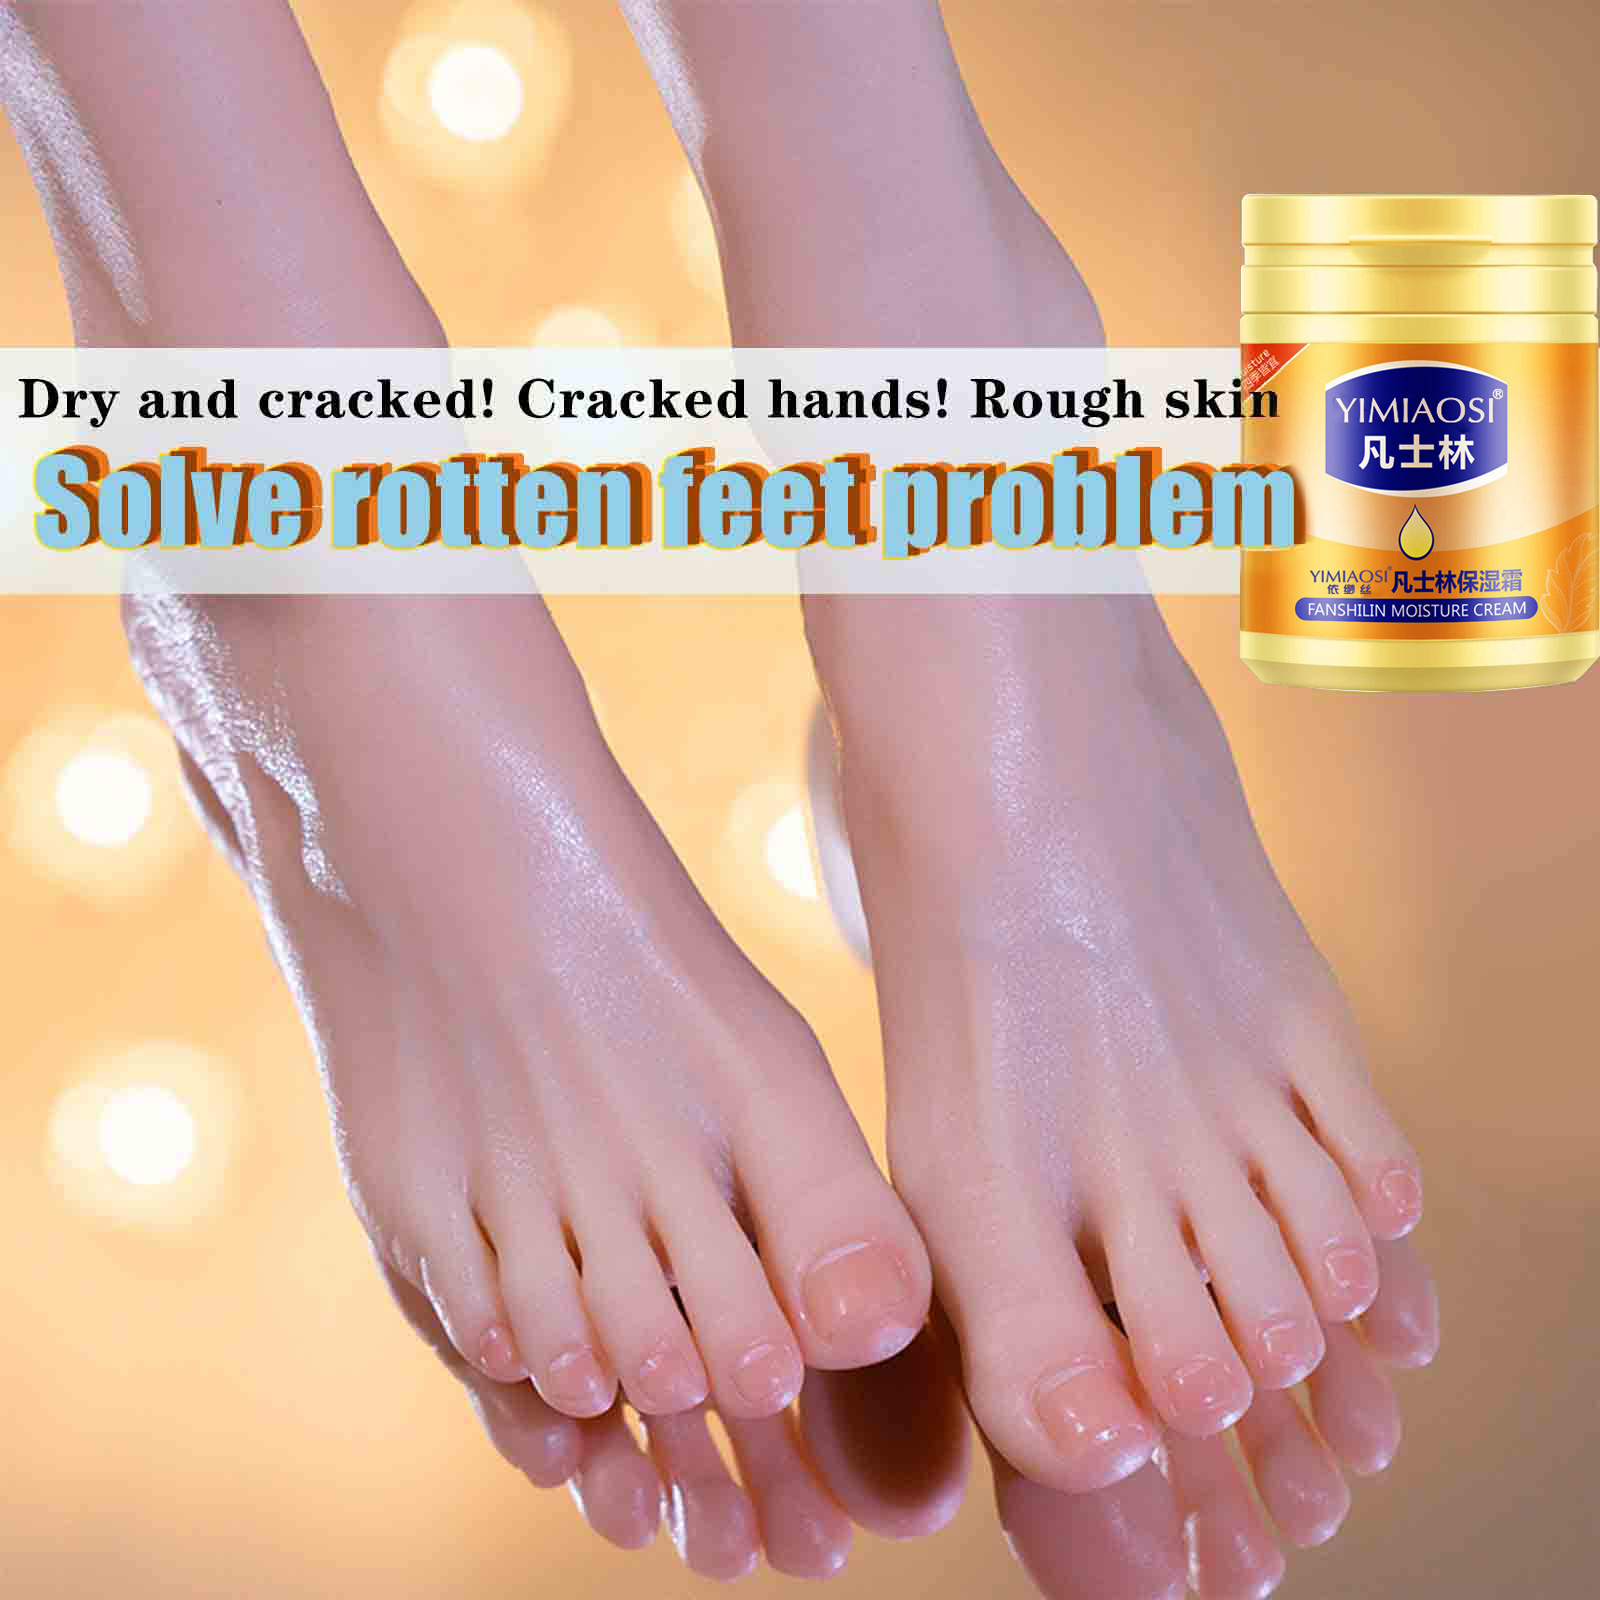 Vaseline Face Cream Moisturizing Whitening Lasting Body Hand Foot Skin Cream Whitening Crack Heel Remover Cream